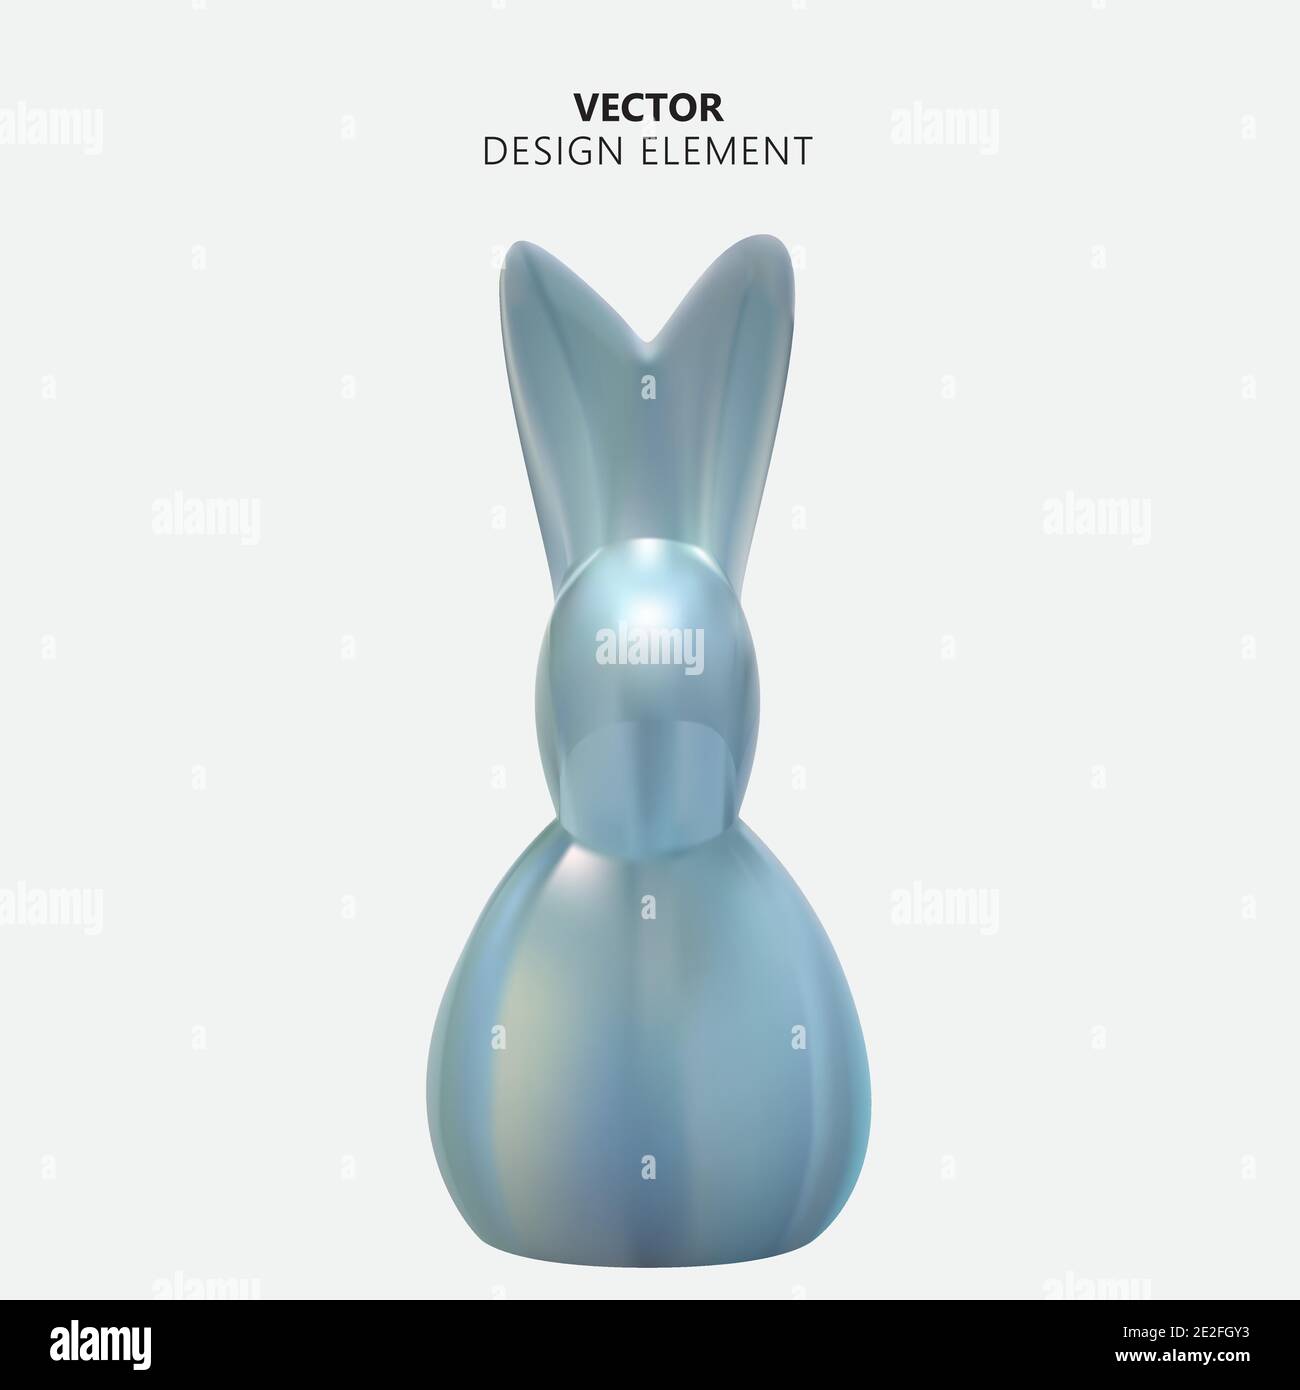 Realistic 3d easter bunny statuette. Design Element Vector Illustration. Stock Vector